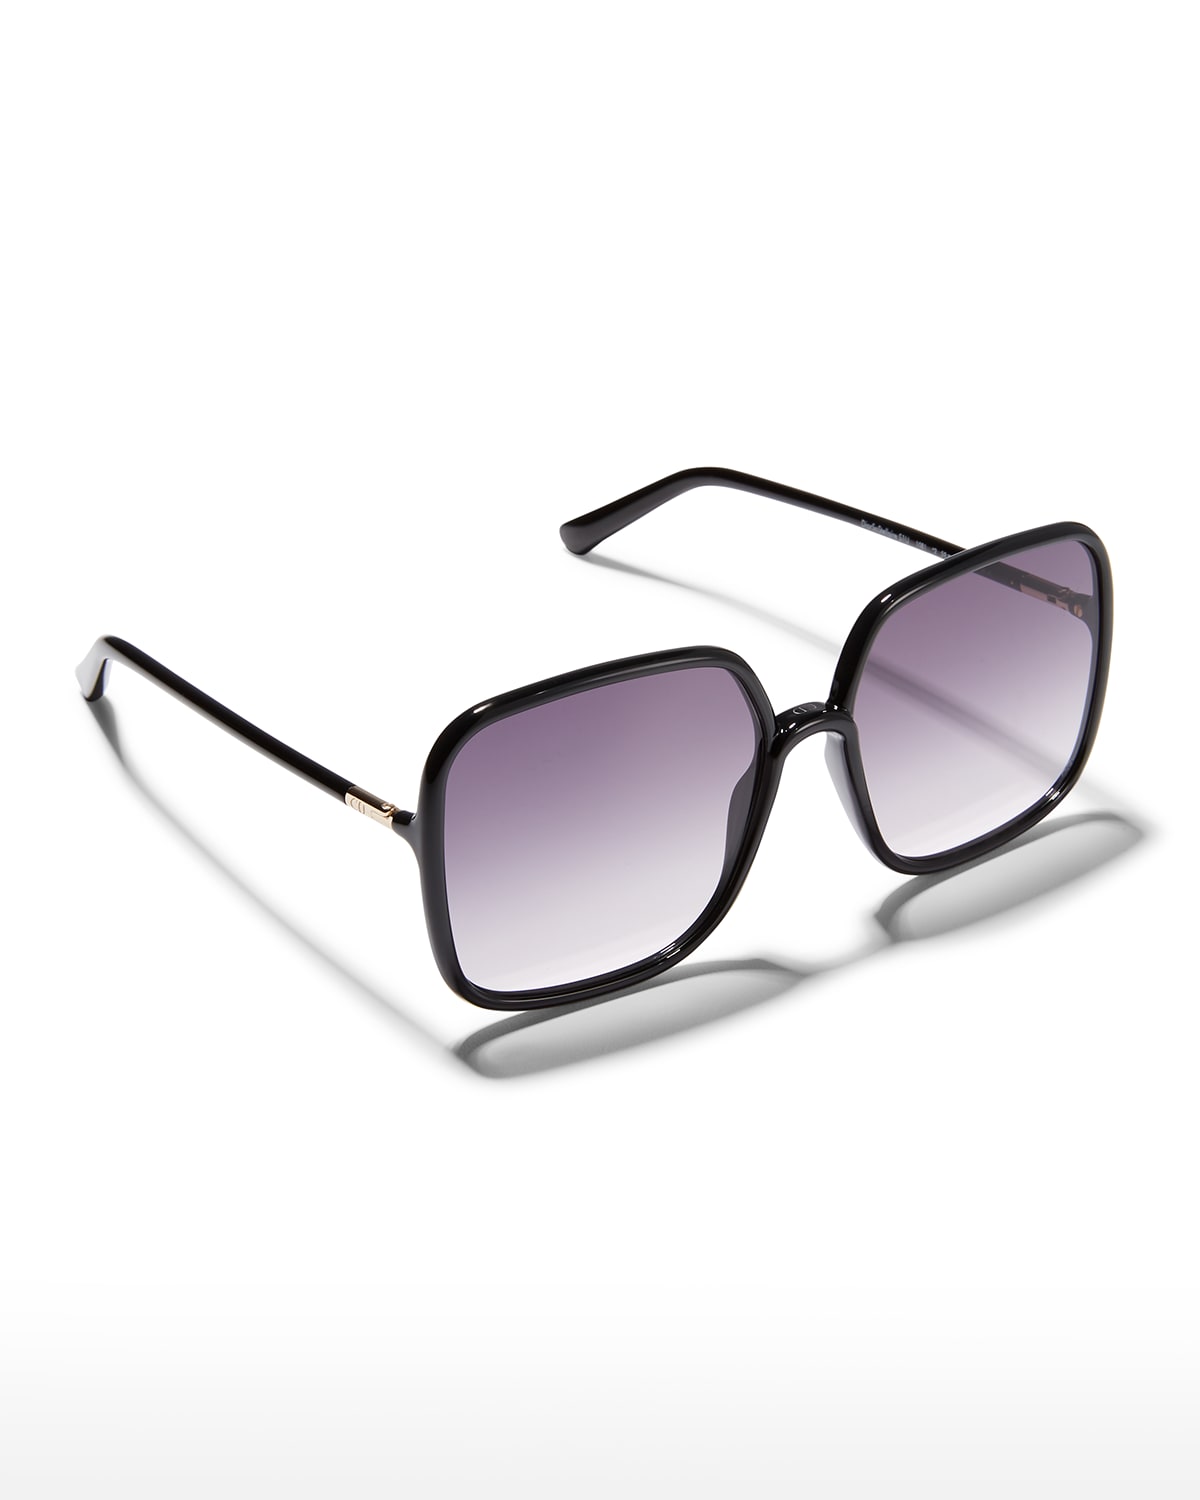 Dior DiorSoStellaire1 59mm Oversized Square Injection Plastic Sunglasses